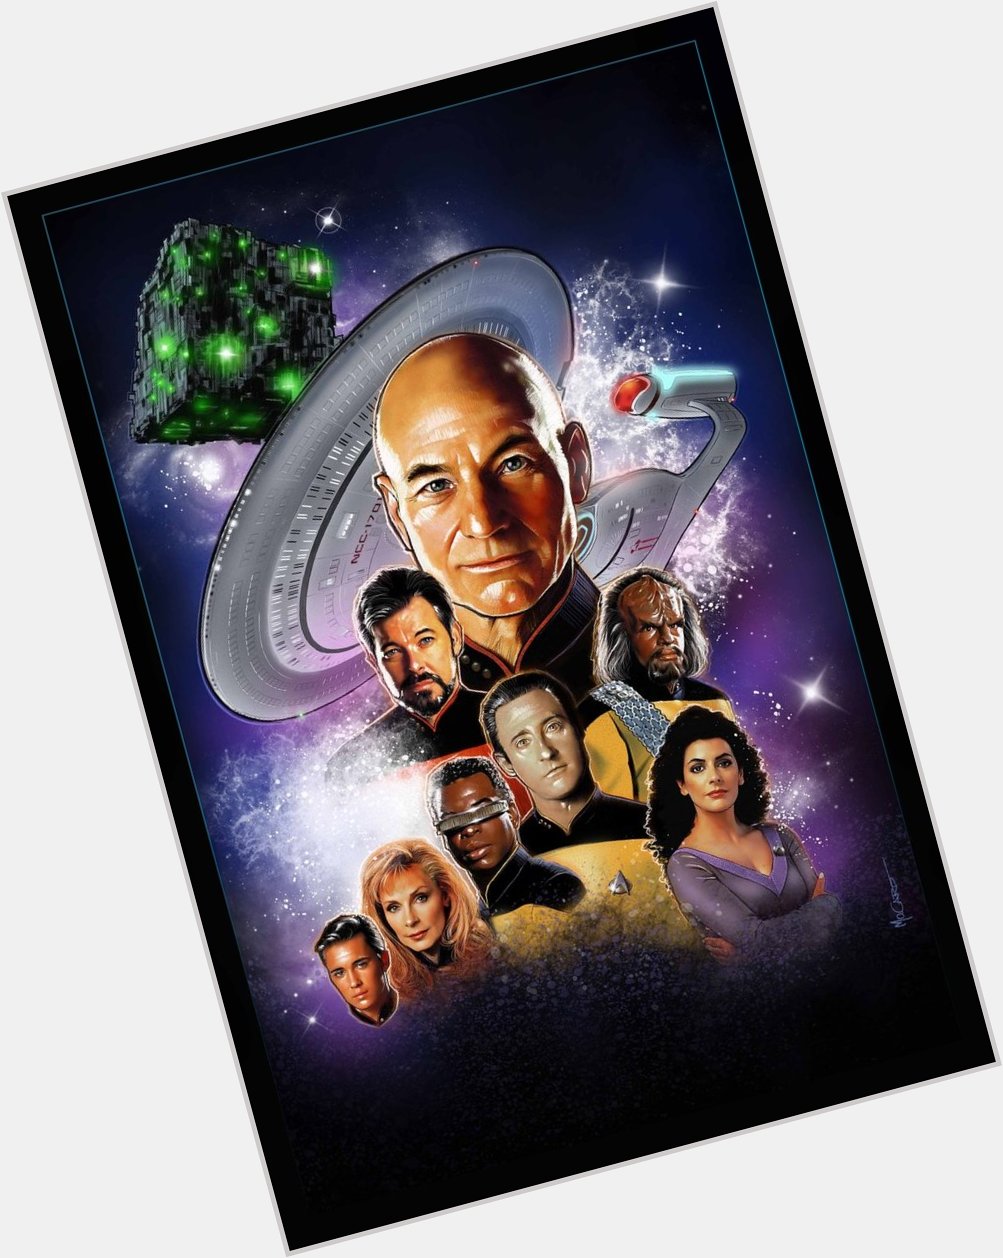 Star Trek: The Next Generation - TV Series (1987 - 1994)
Happy Birthday, Levar Burton! 